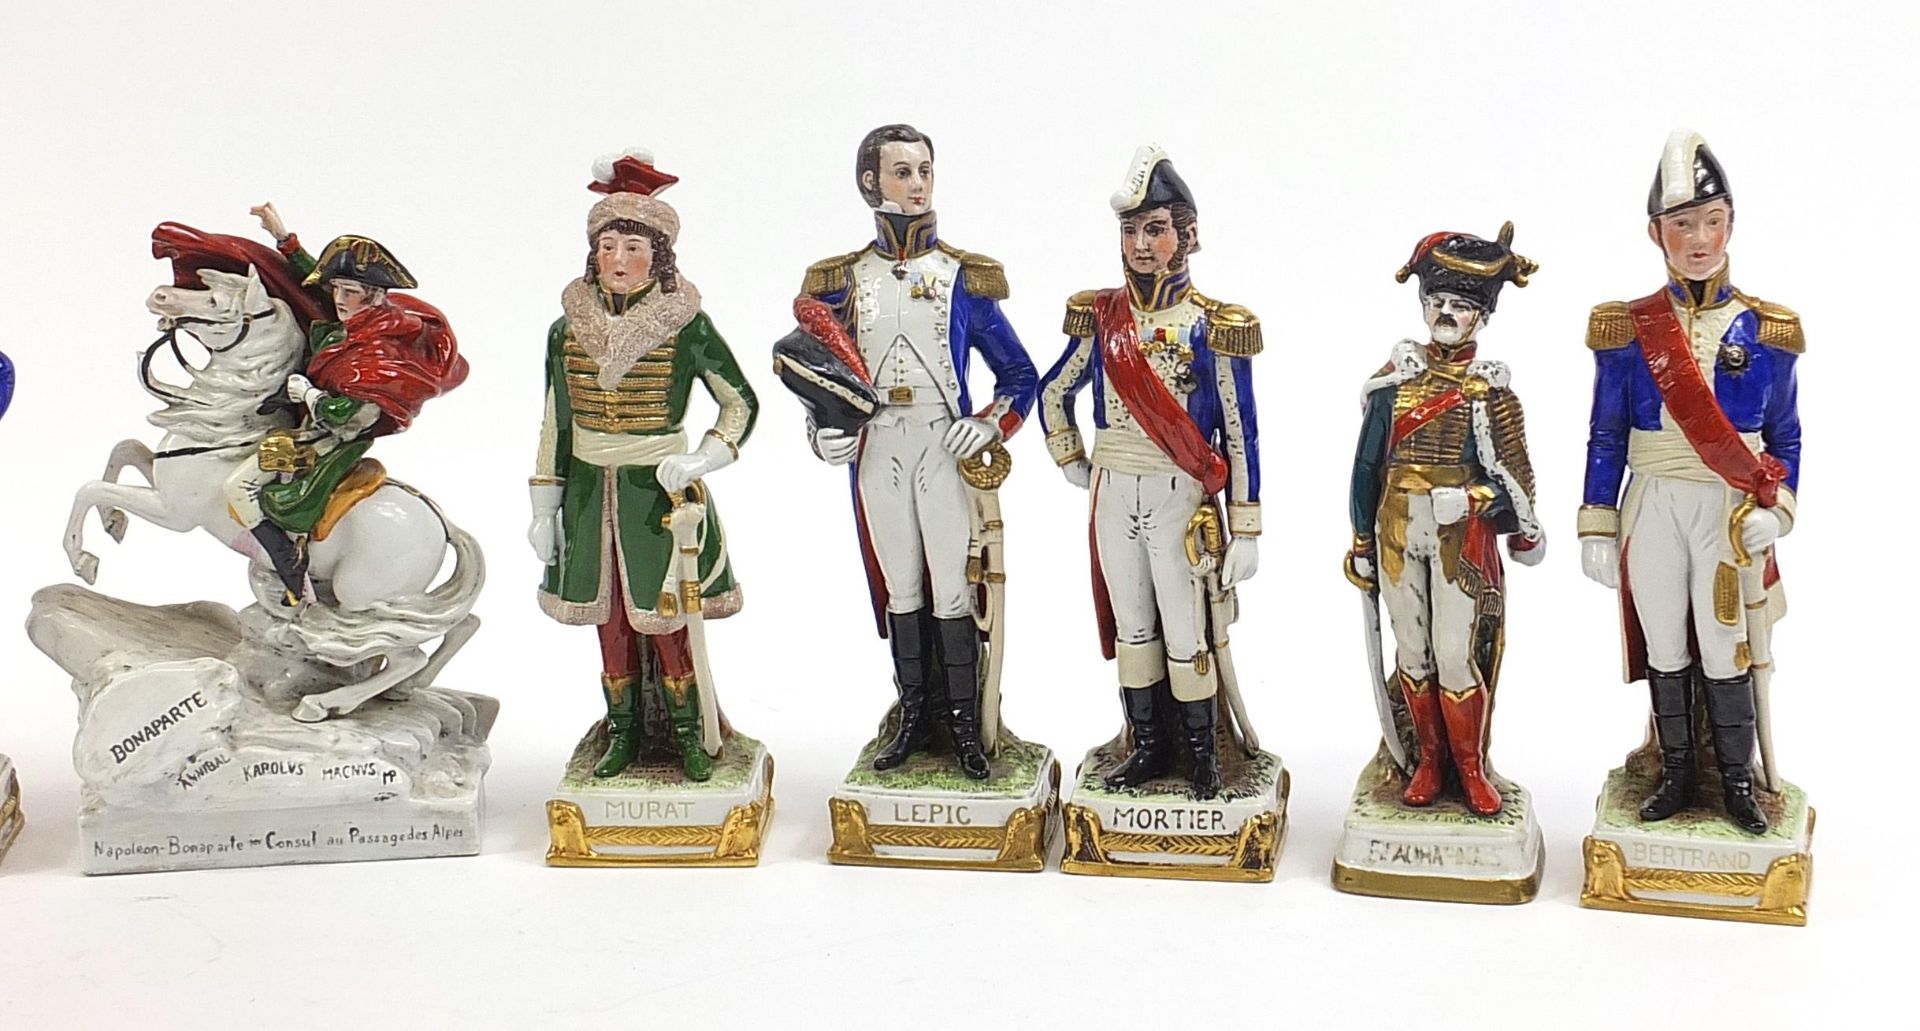 Military interest continental porcelain figures including Napoleon Bonaparte on horseback and - Image 3 of 3